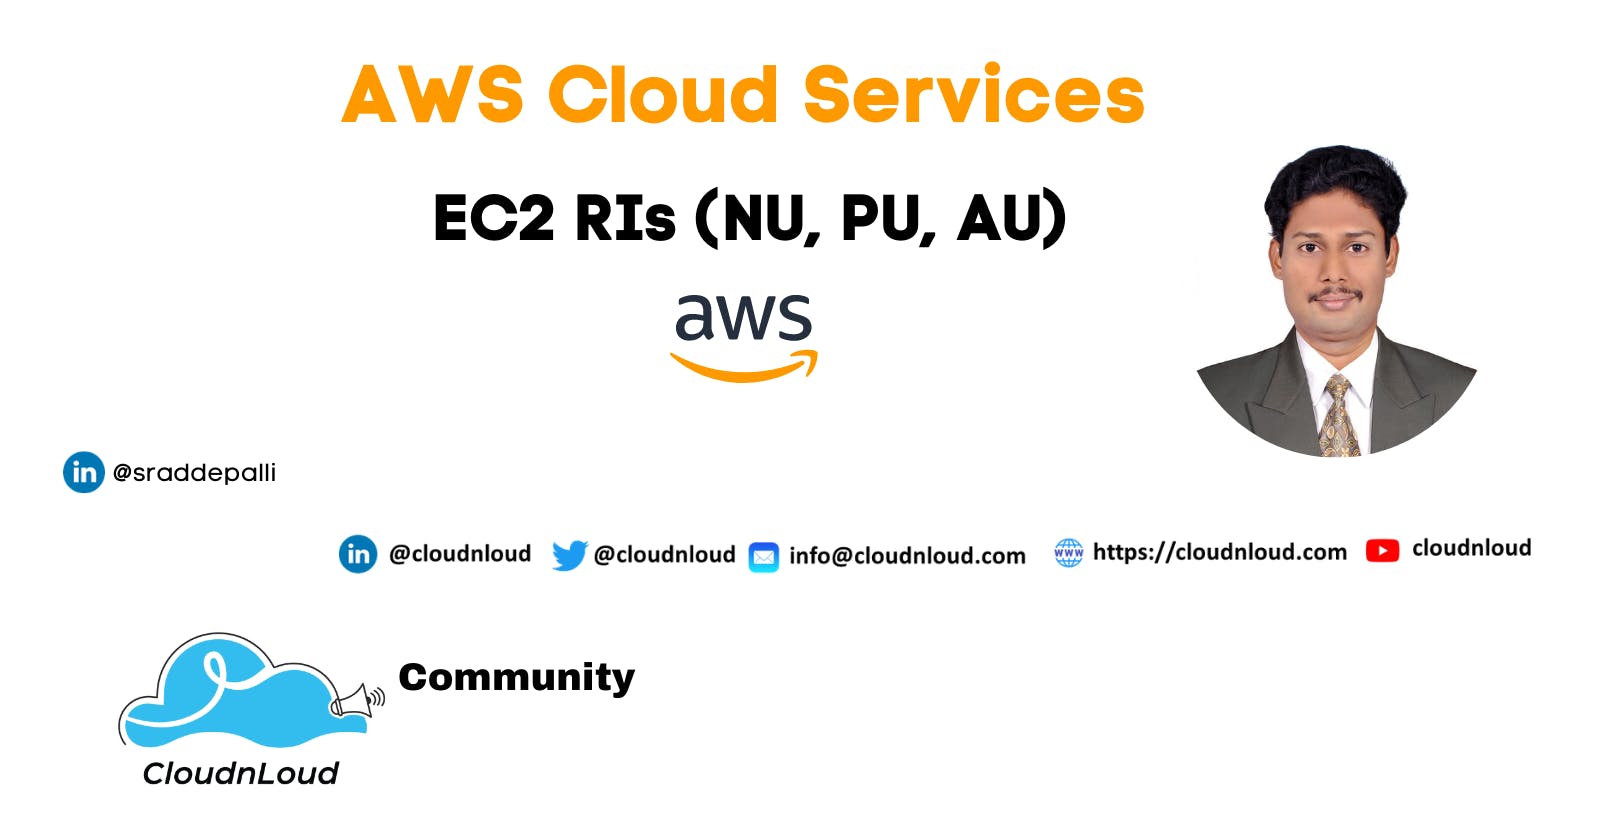 AWS Cloud Services - Savings Plans & EC2 RIs (NU, PU, AU) in AWS